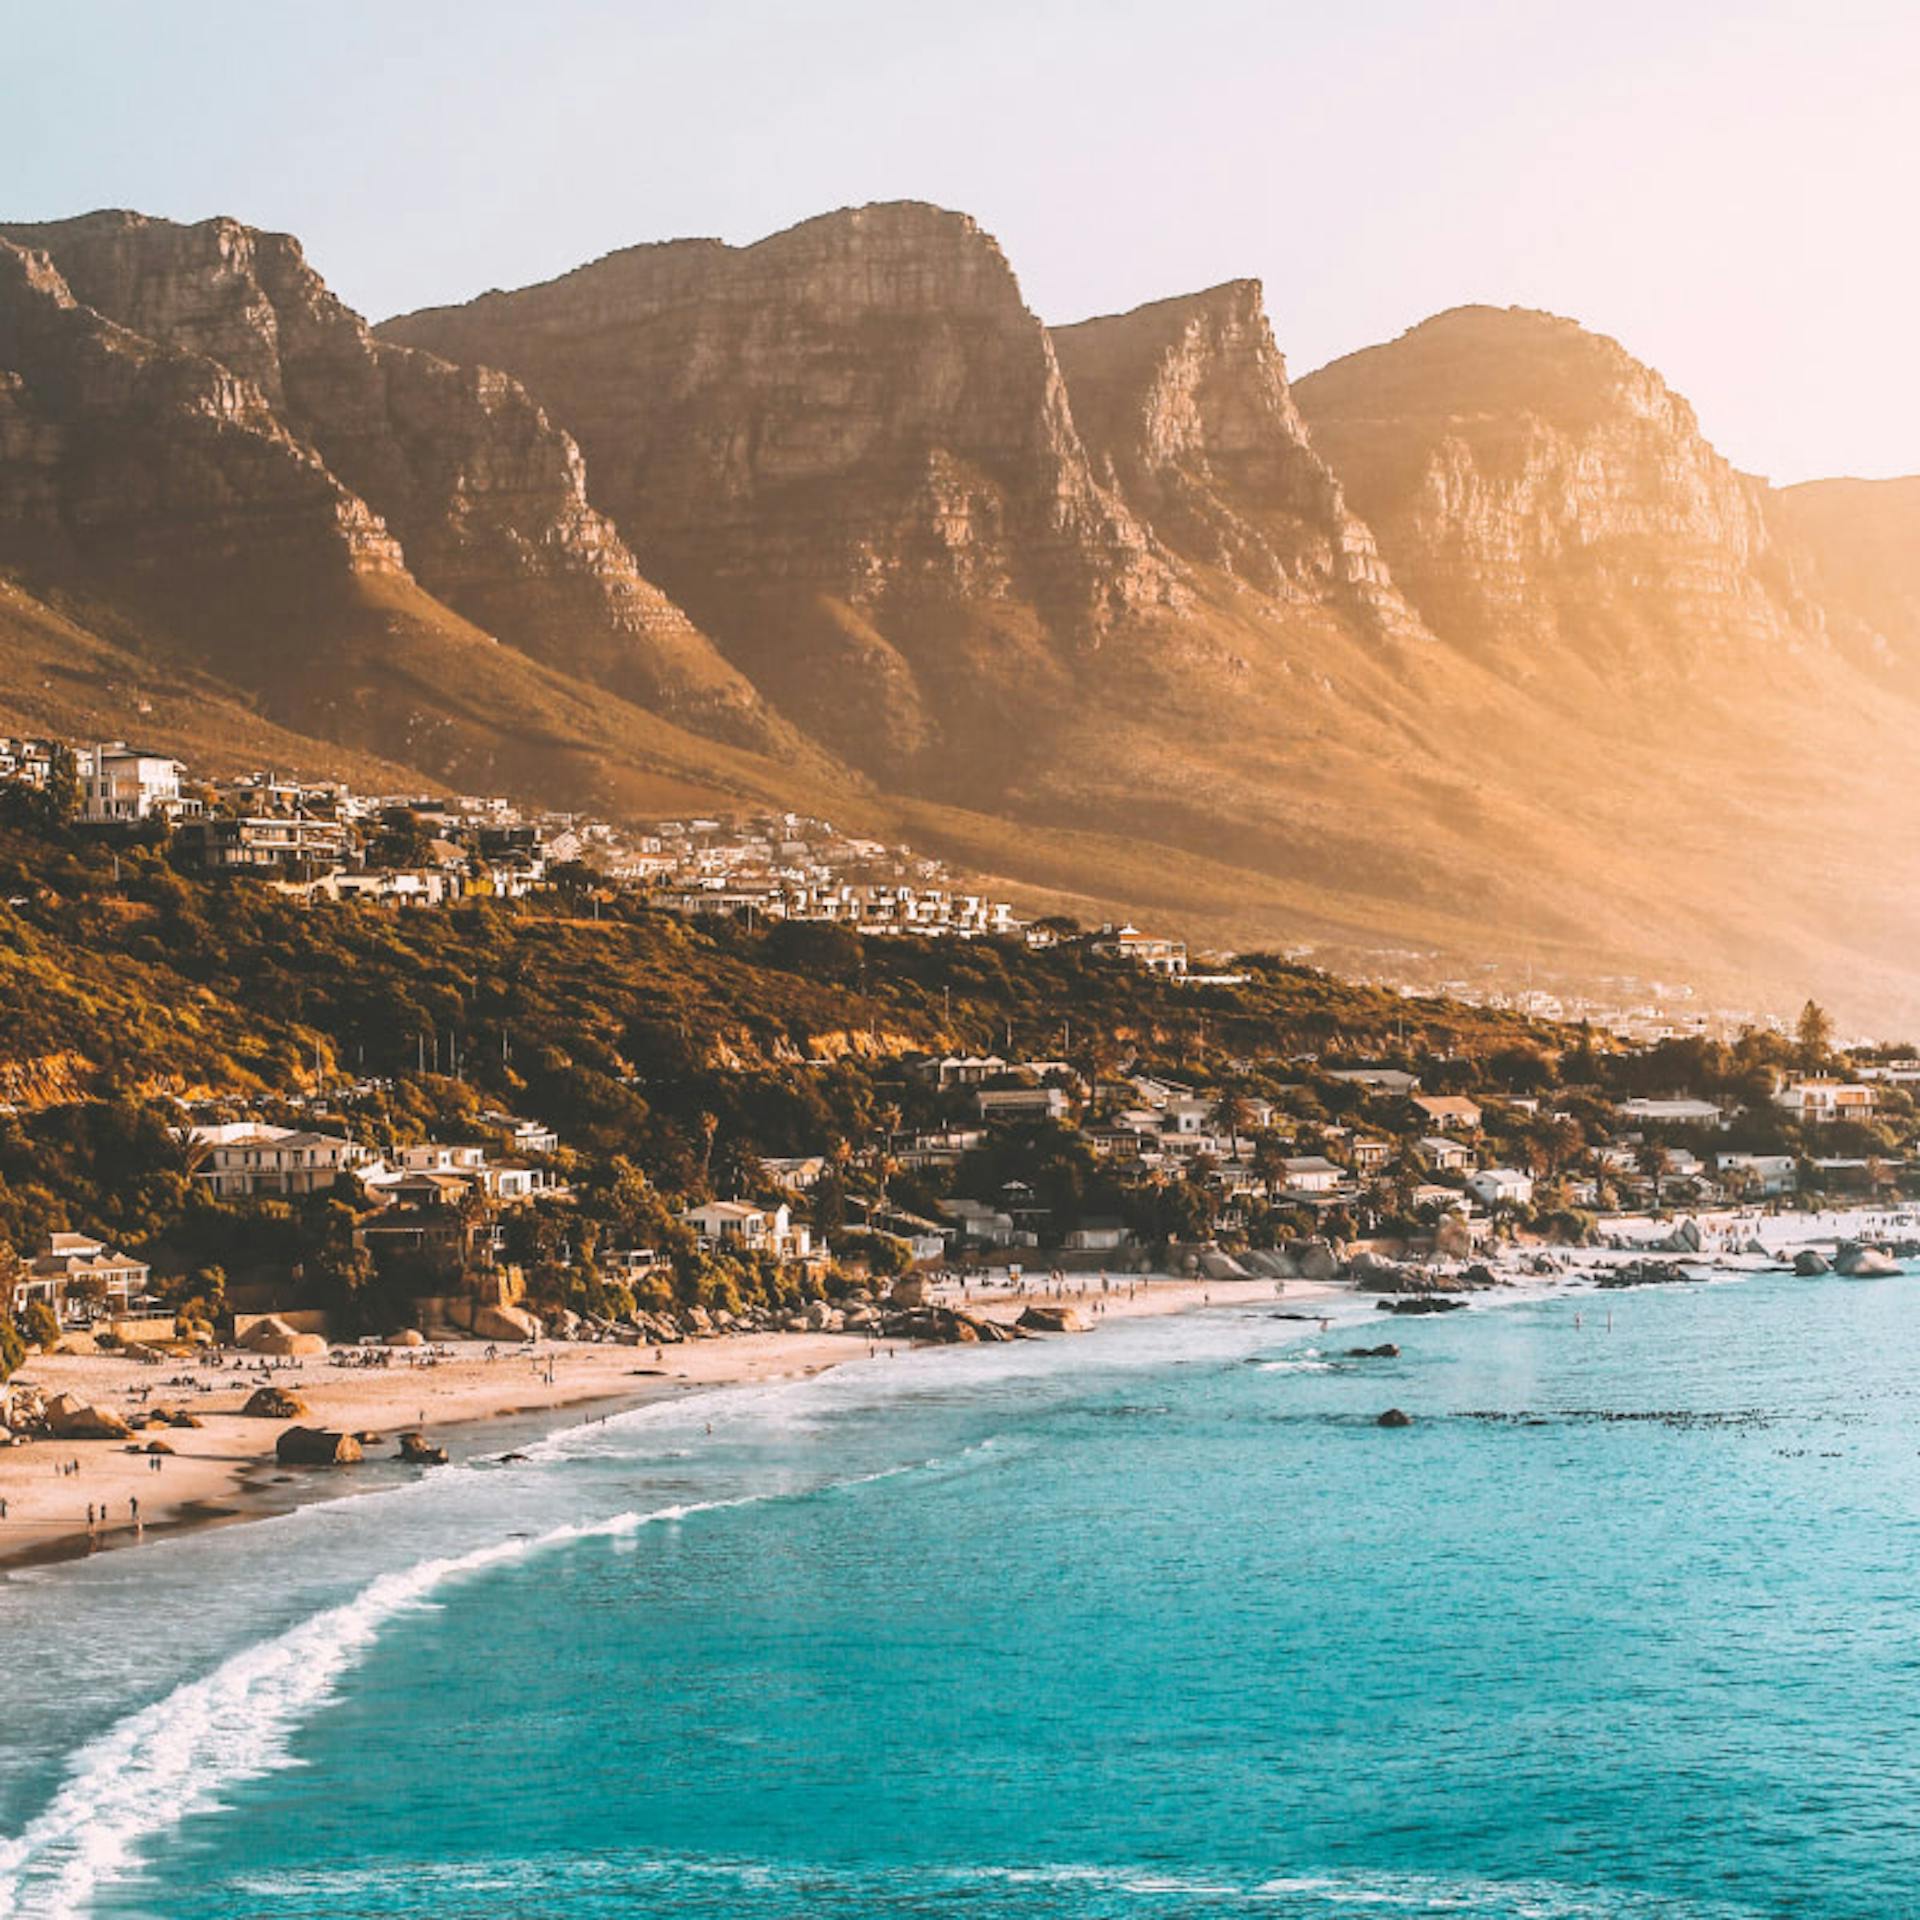 A beautiful coastal city in South Africa.